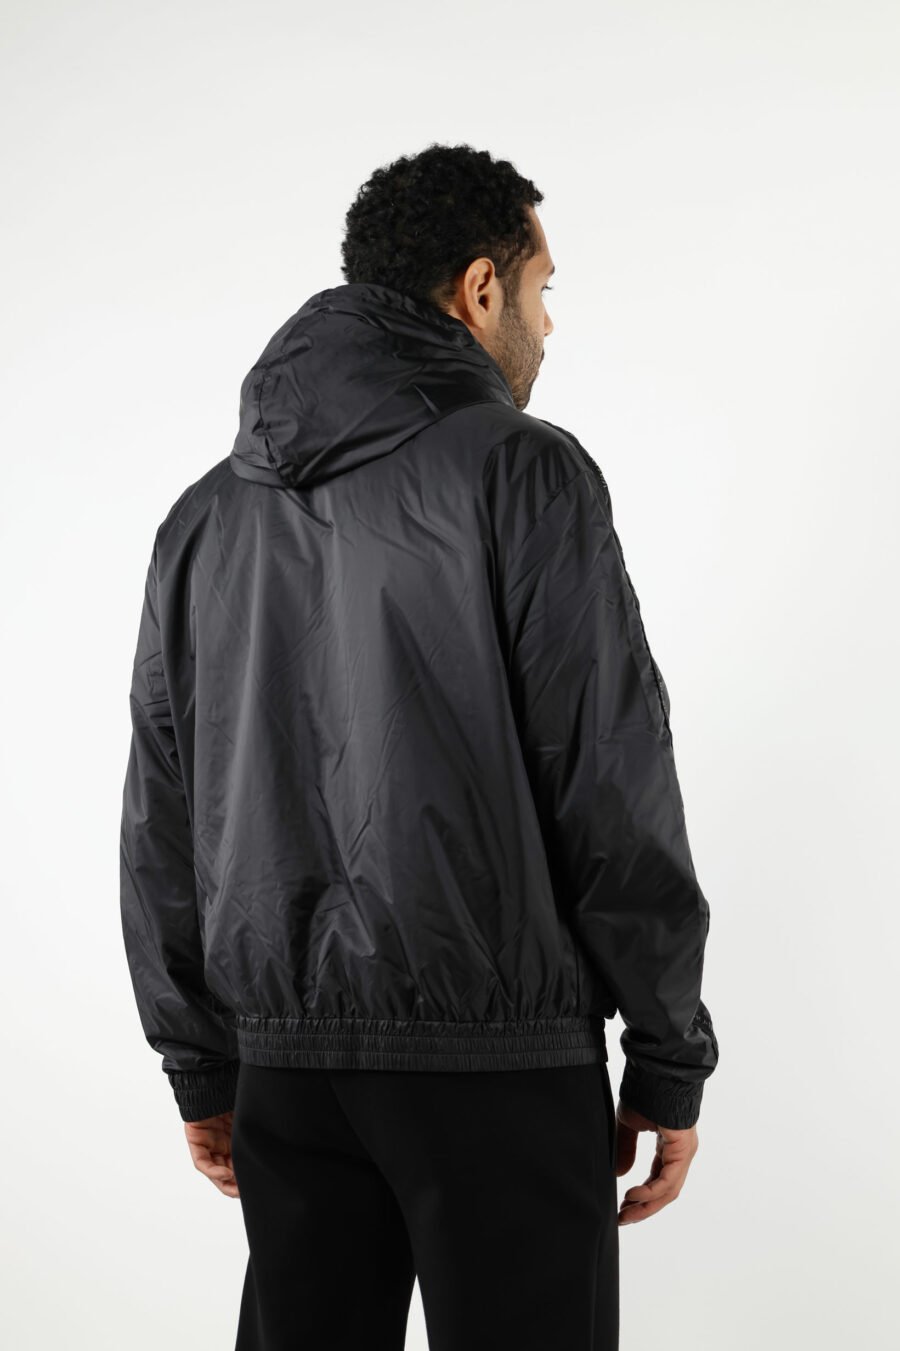 Chaqueta negra impermeable con capucha lineas blancas laterales y logo "lux identity" - 110957